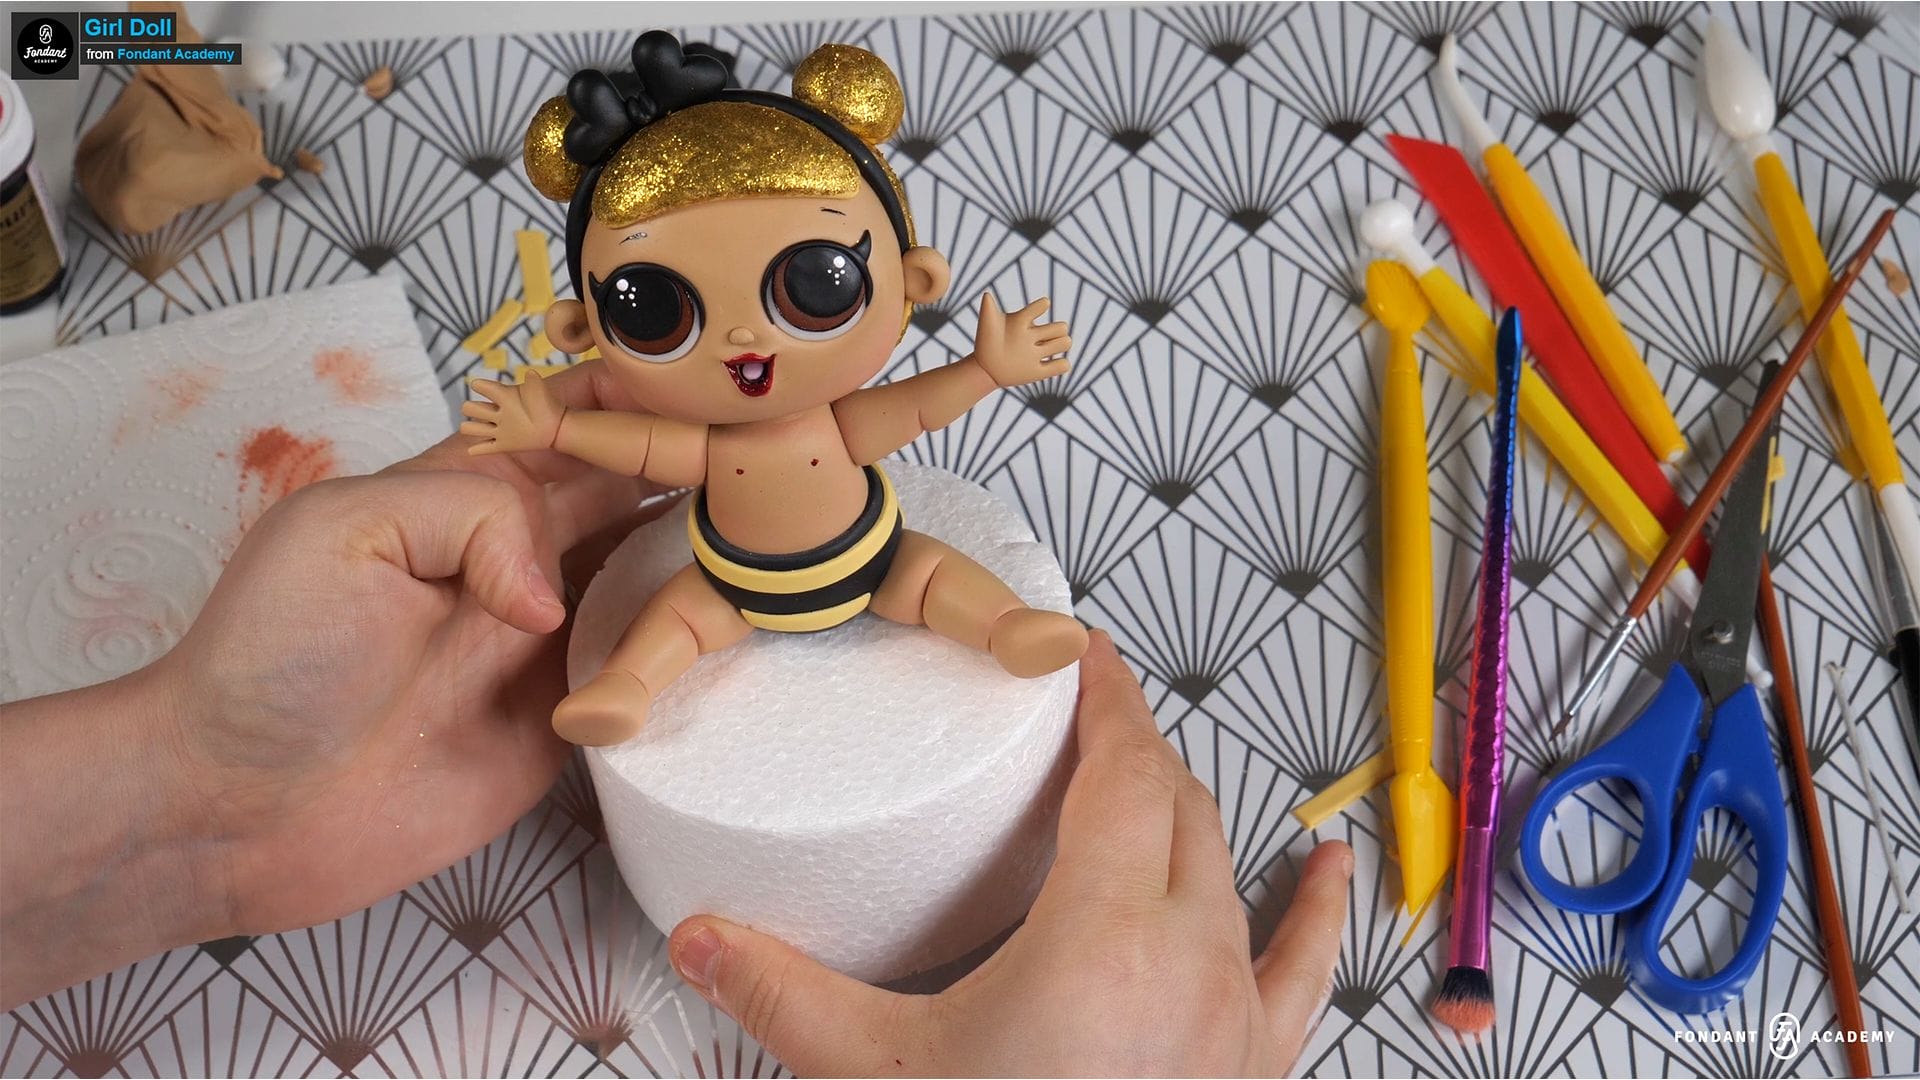 Girl Doll With Big Eyes - Fondant Cake Topper Tutorial 5